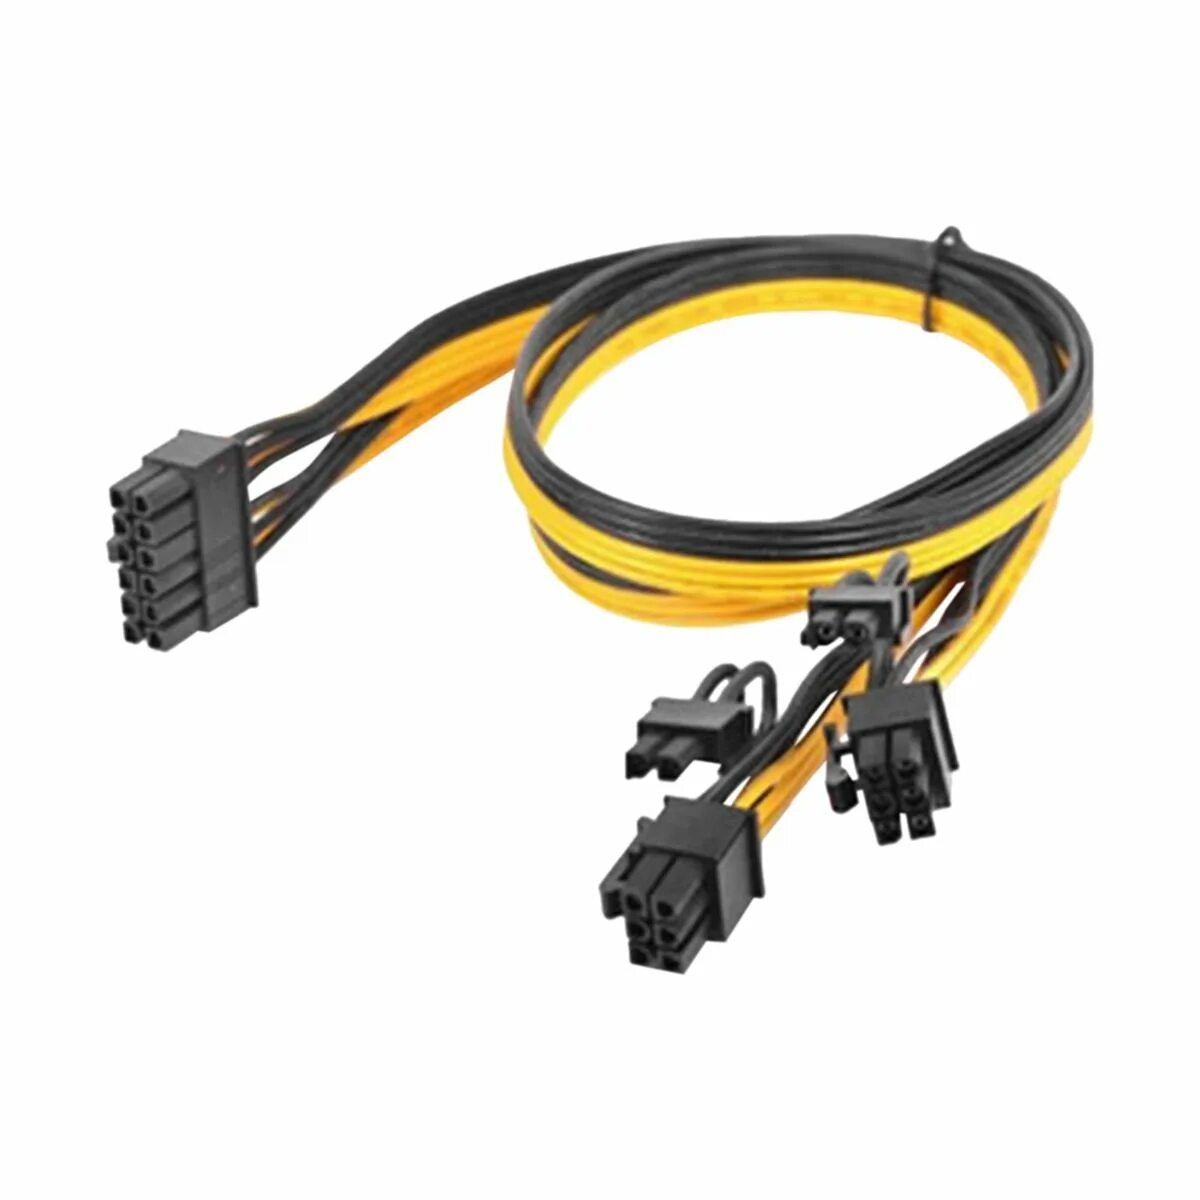 Connect the pcie power cable. PCI-E 8 Pin 6+2 Corsair. CPU Power 4 Pin кабель Corsair. 8 Pin Corsair кабель. Провод PCIE 8+6 Pin.